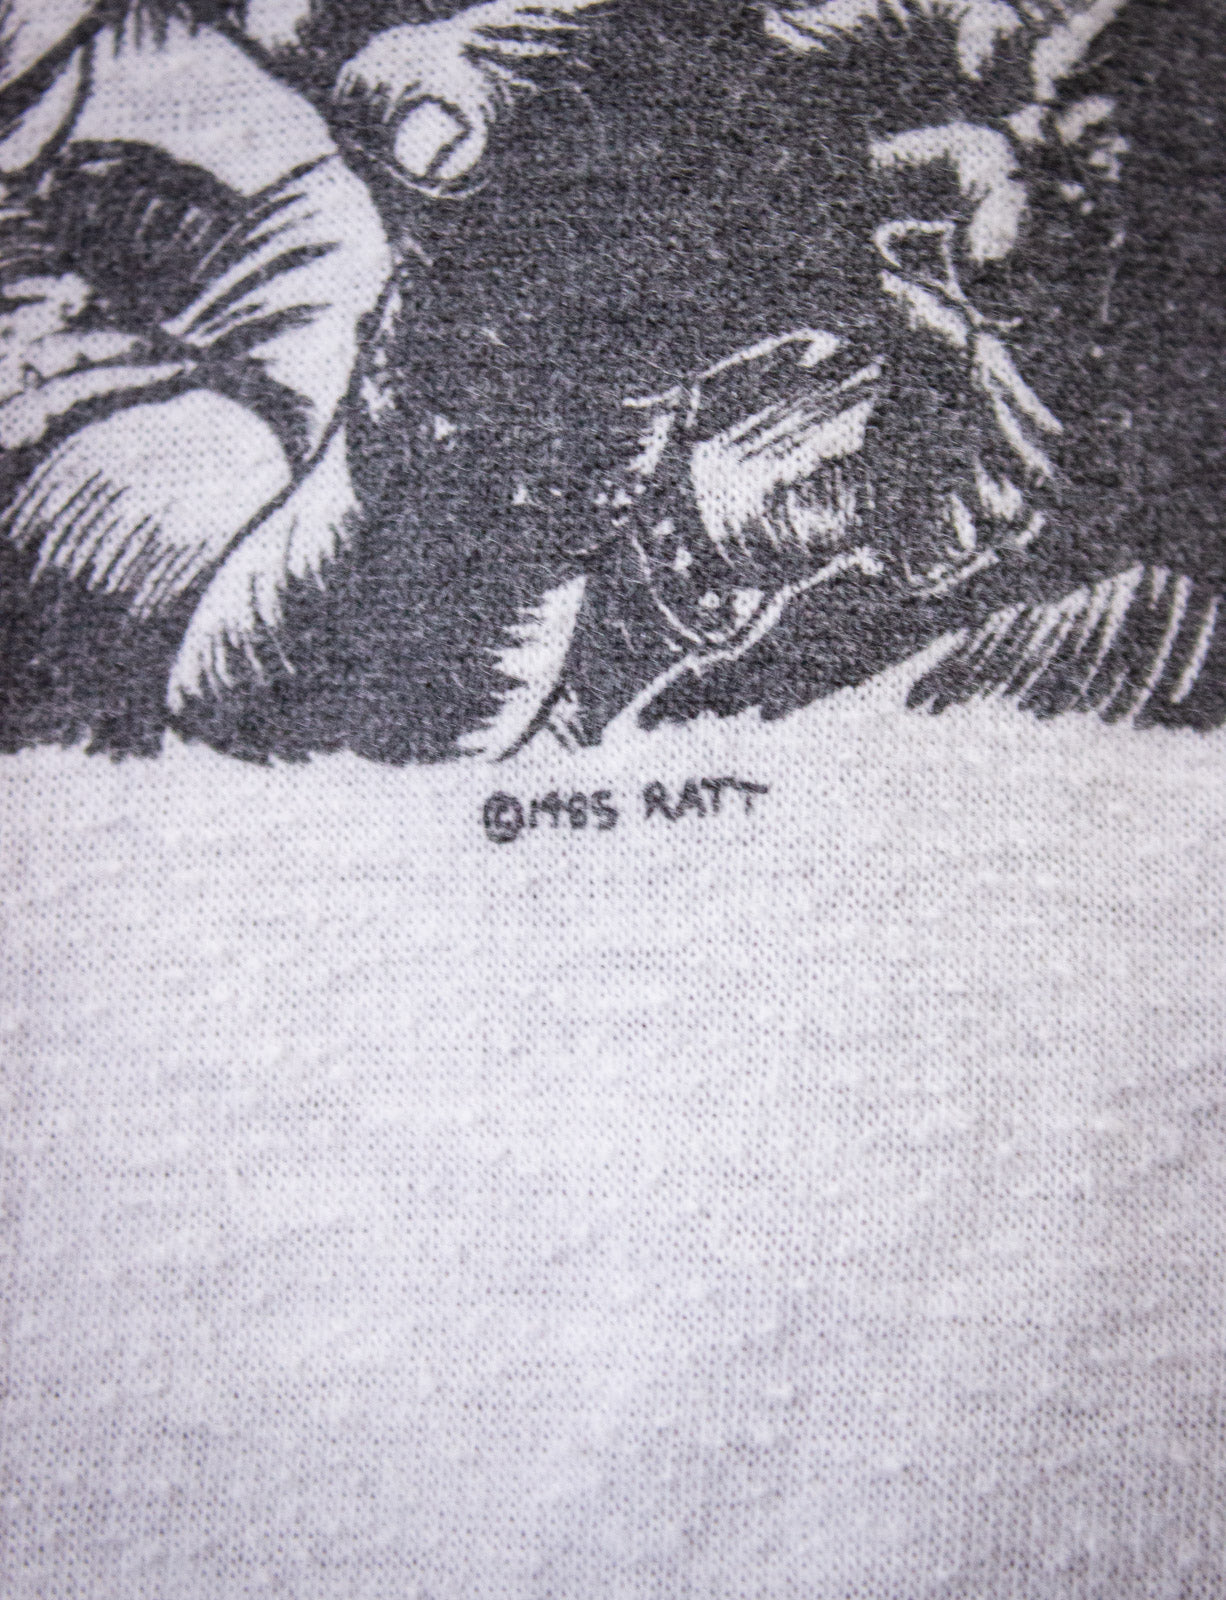 Vintage Ratt Patrol Raglan Concert T Shirt 1985 White/Black Large